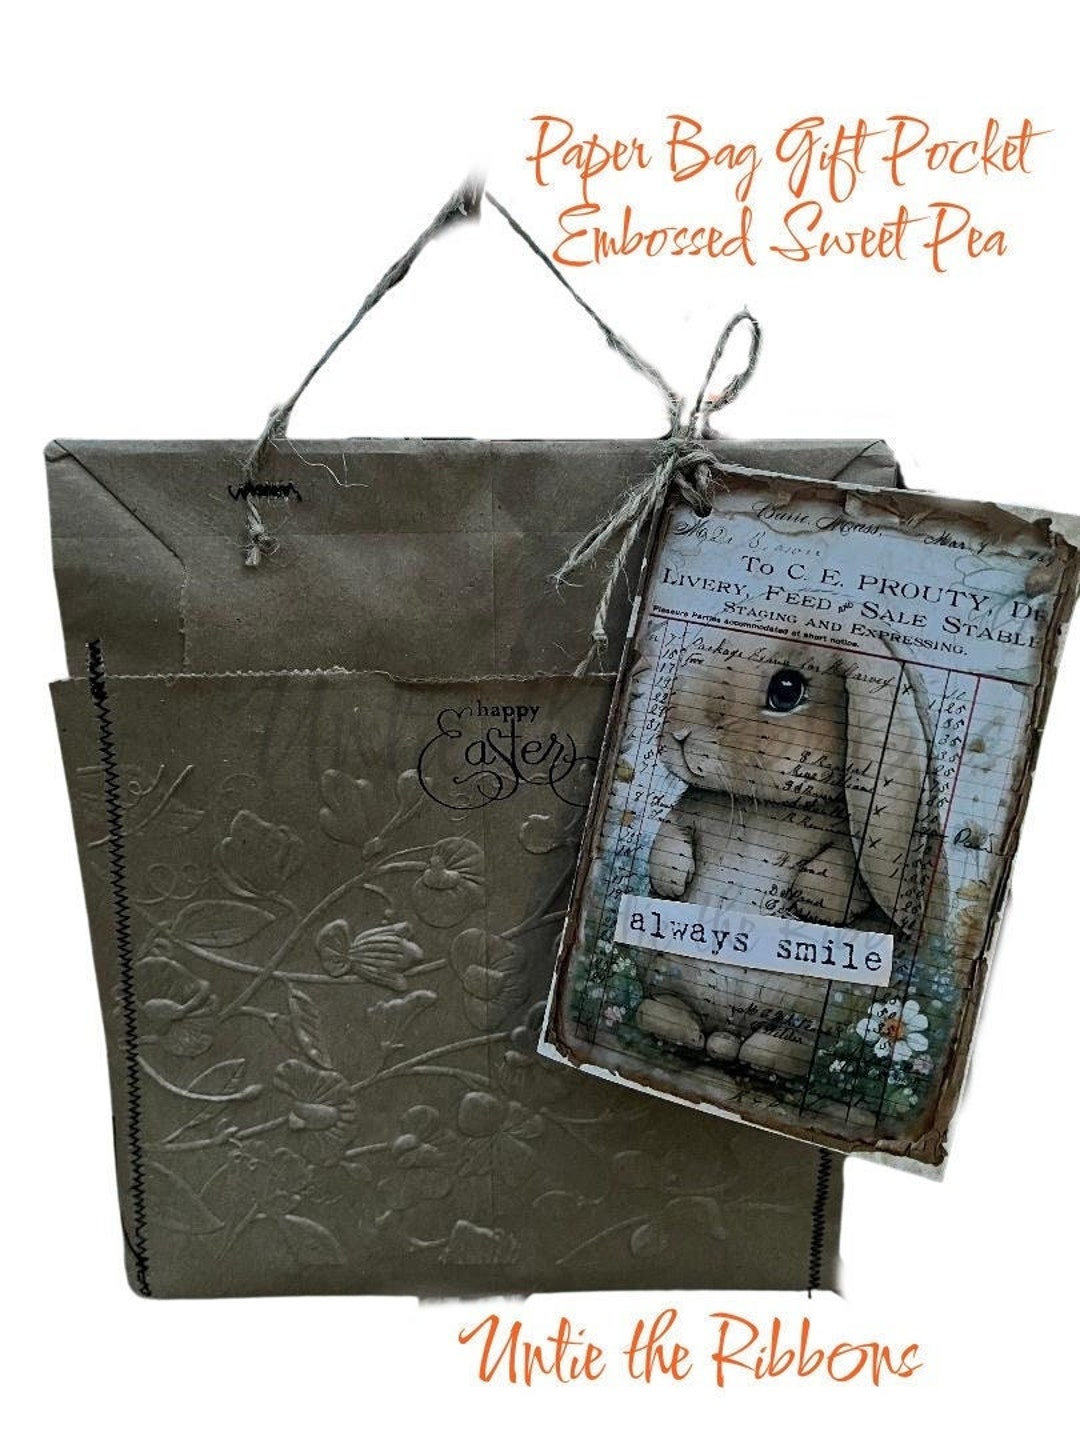 Pef Incarijk voor mij Paper Bag Gift Pocket/journal Pocket Large Embossed Sweet - Etsy